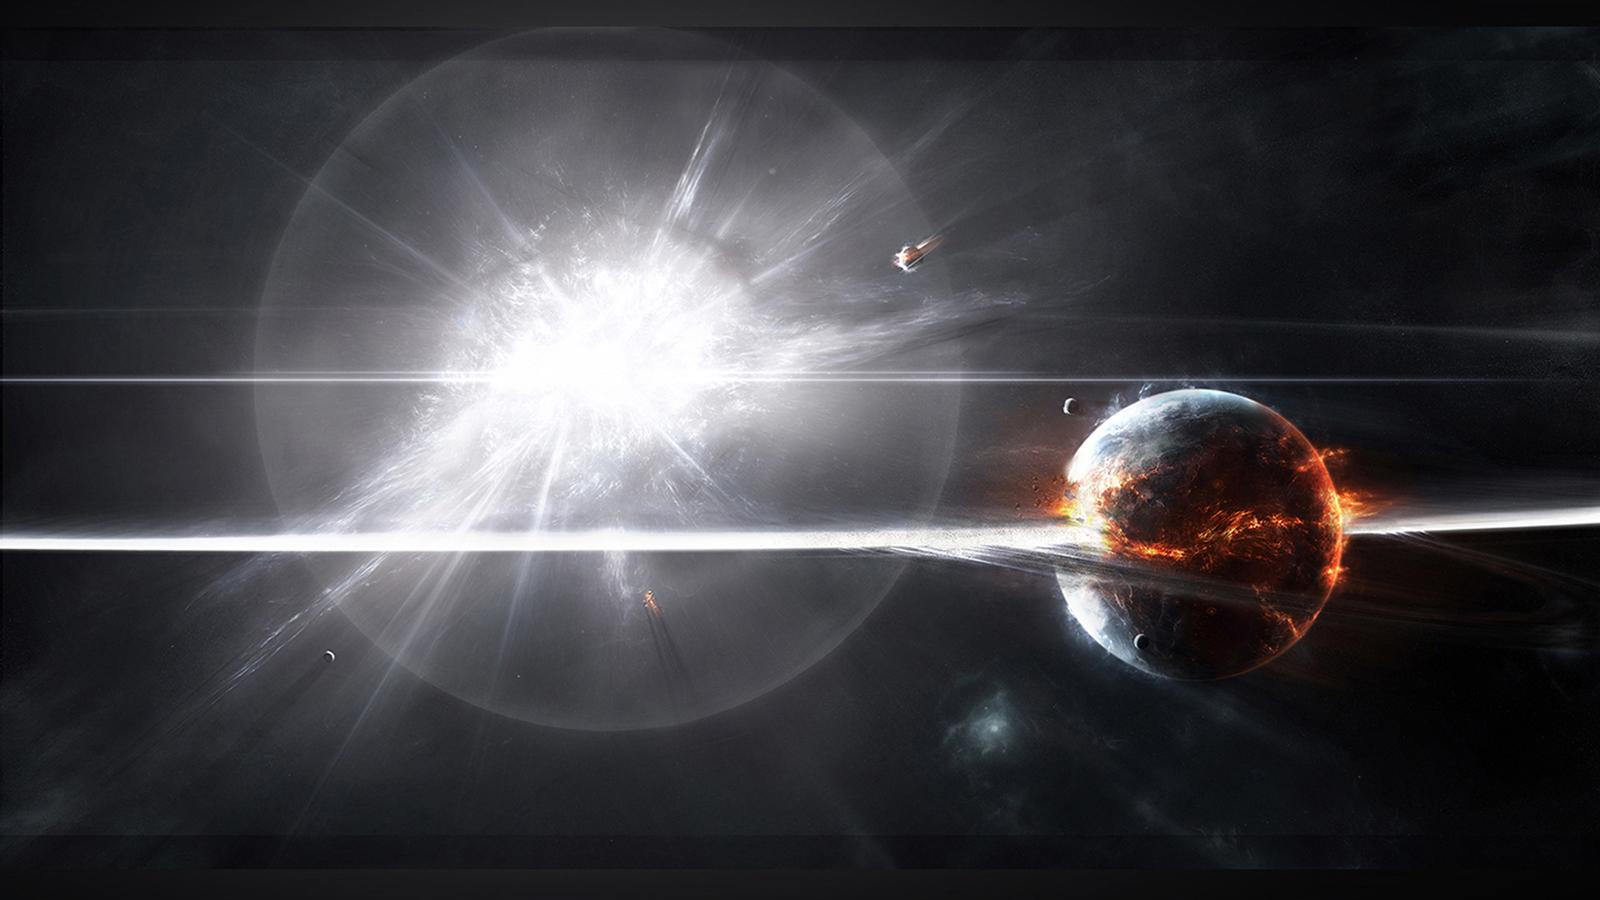 Supernova Star Explosion Planet Destruction wallpaper download